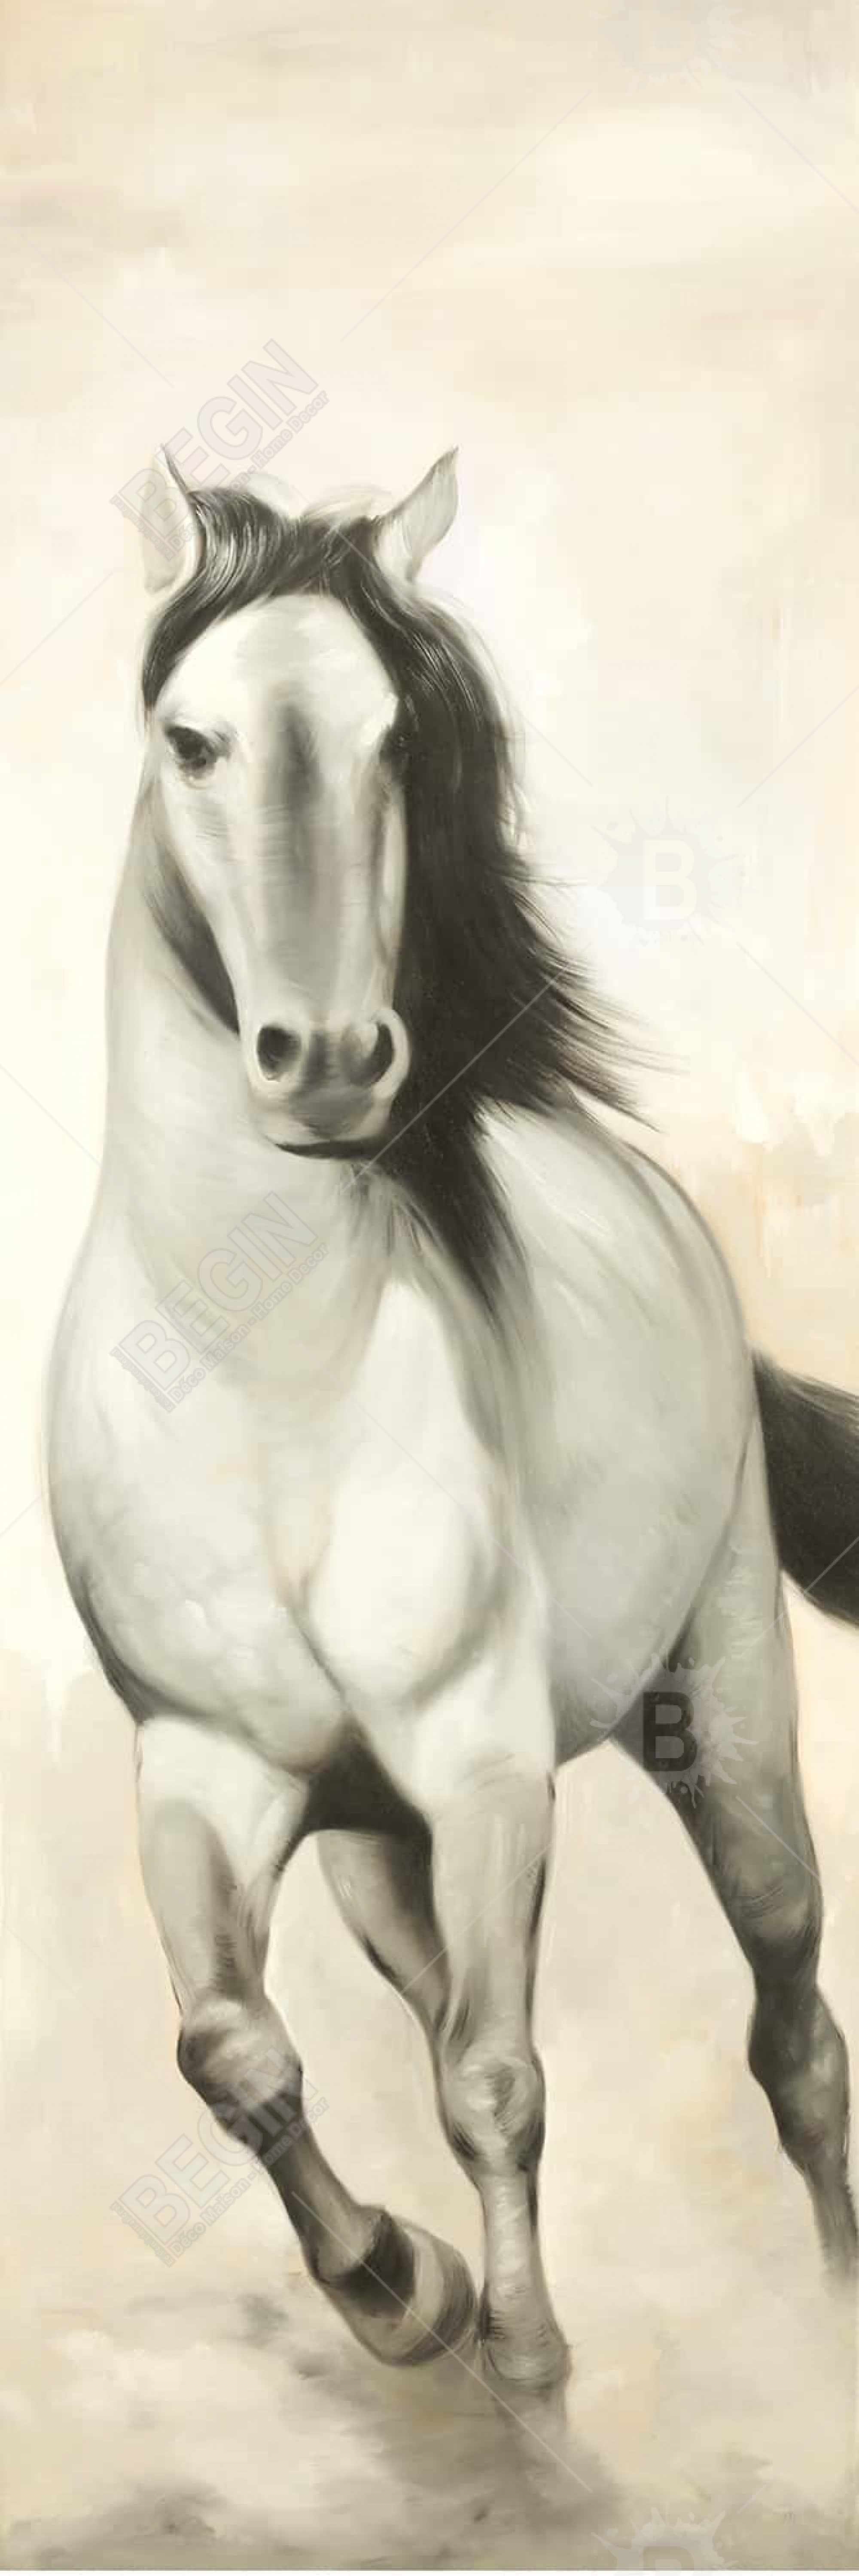 Graceful horse